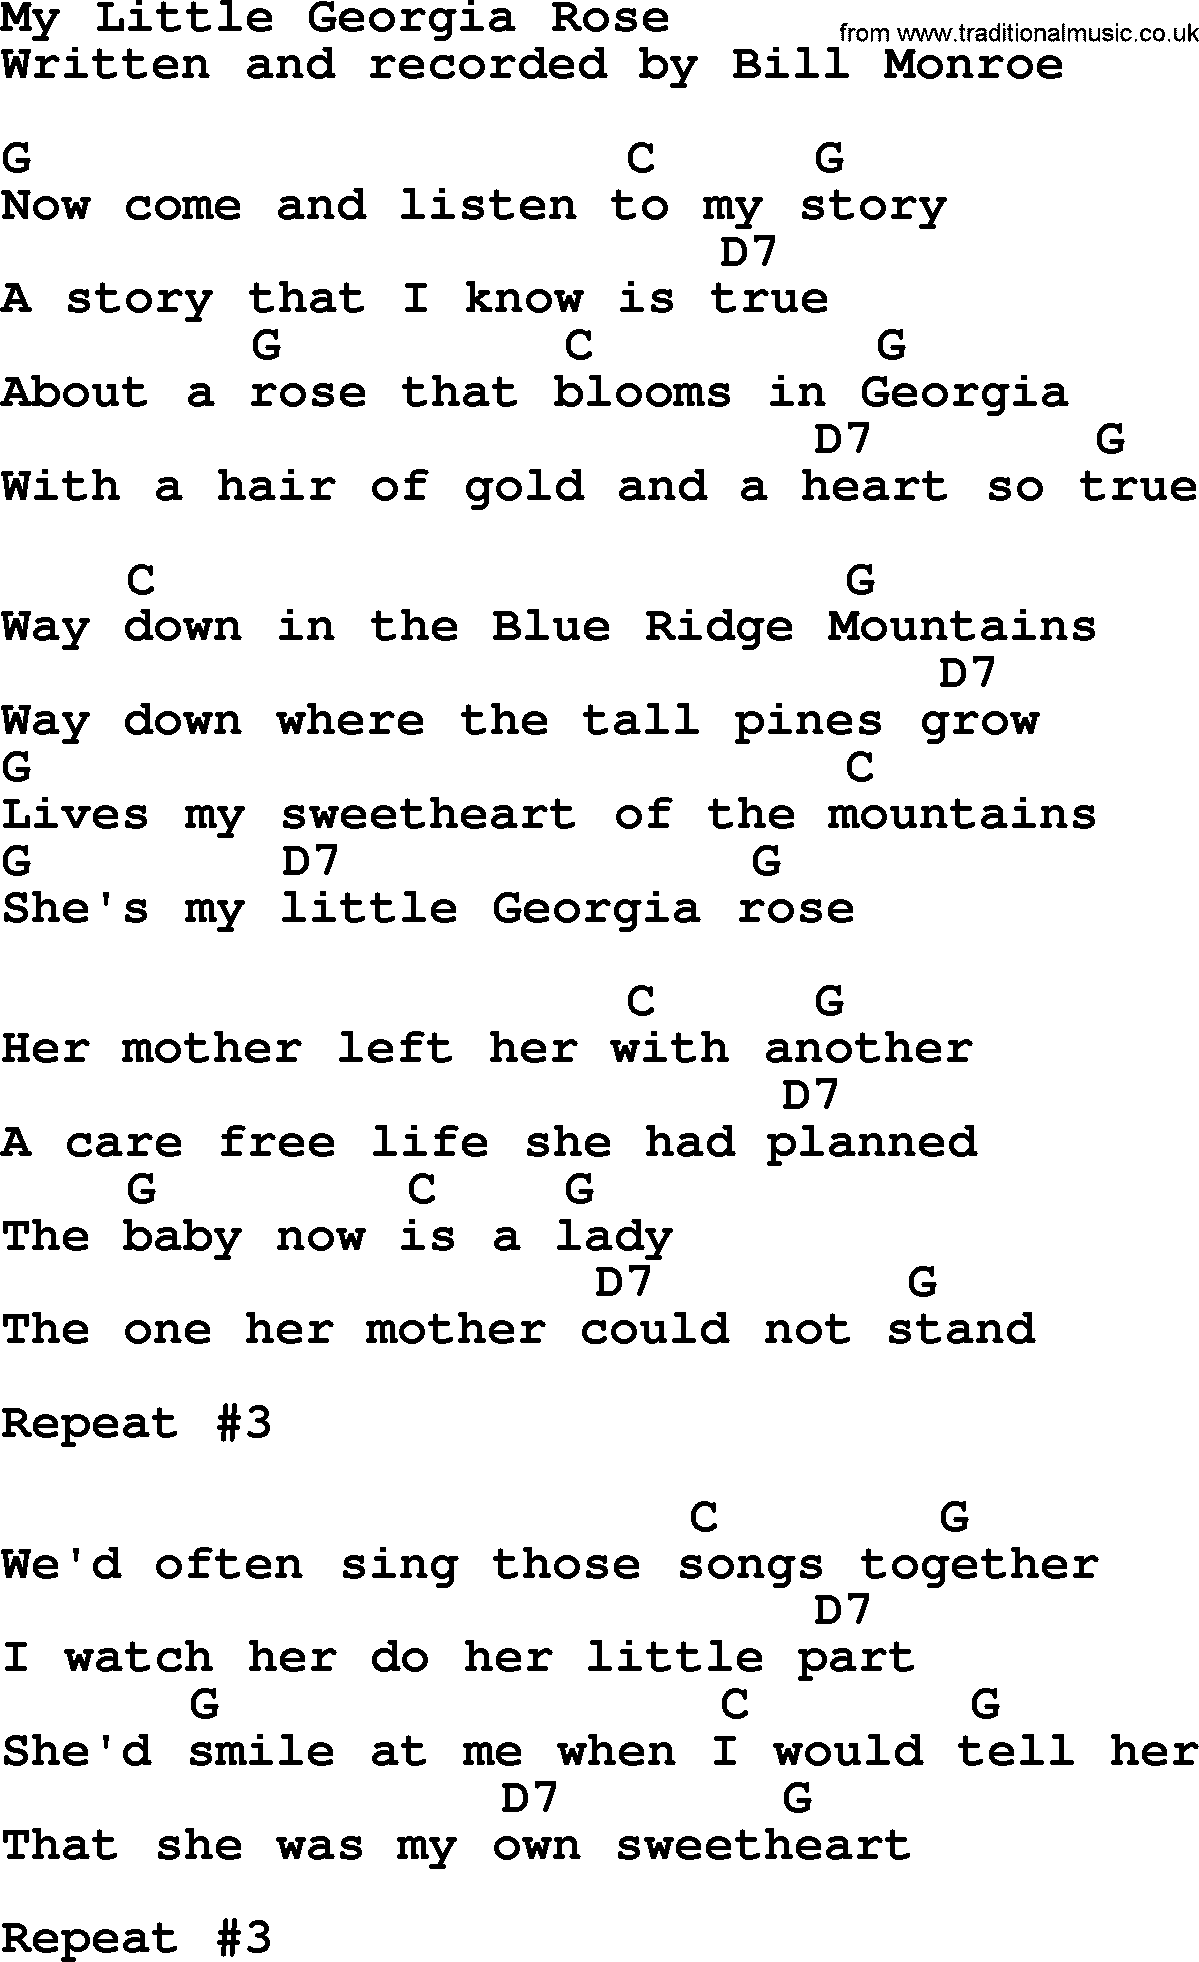 My Little Georgia Rose - Bluegrass lyrics with chords